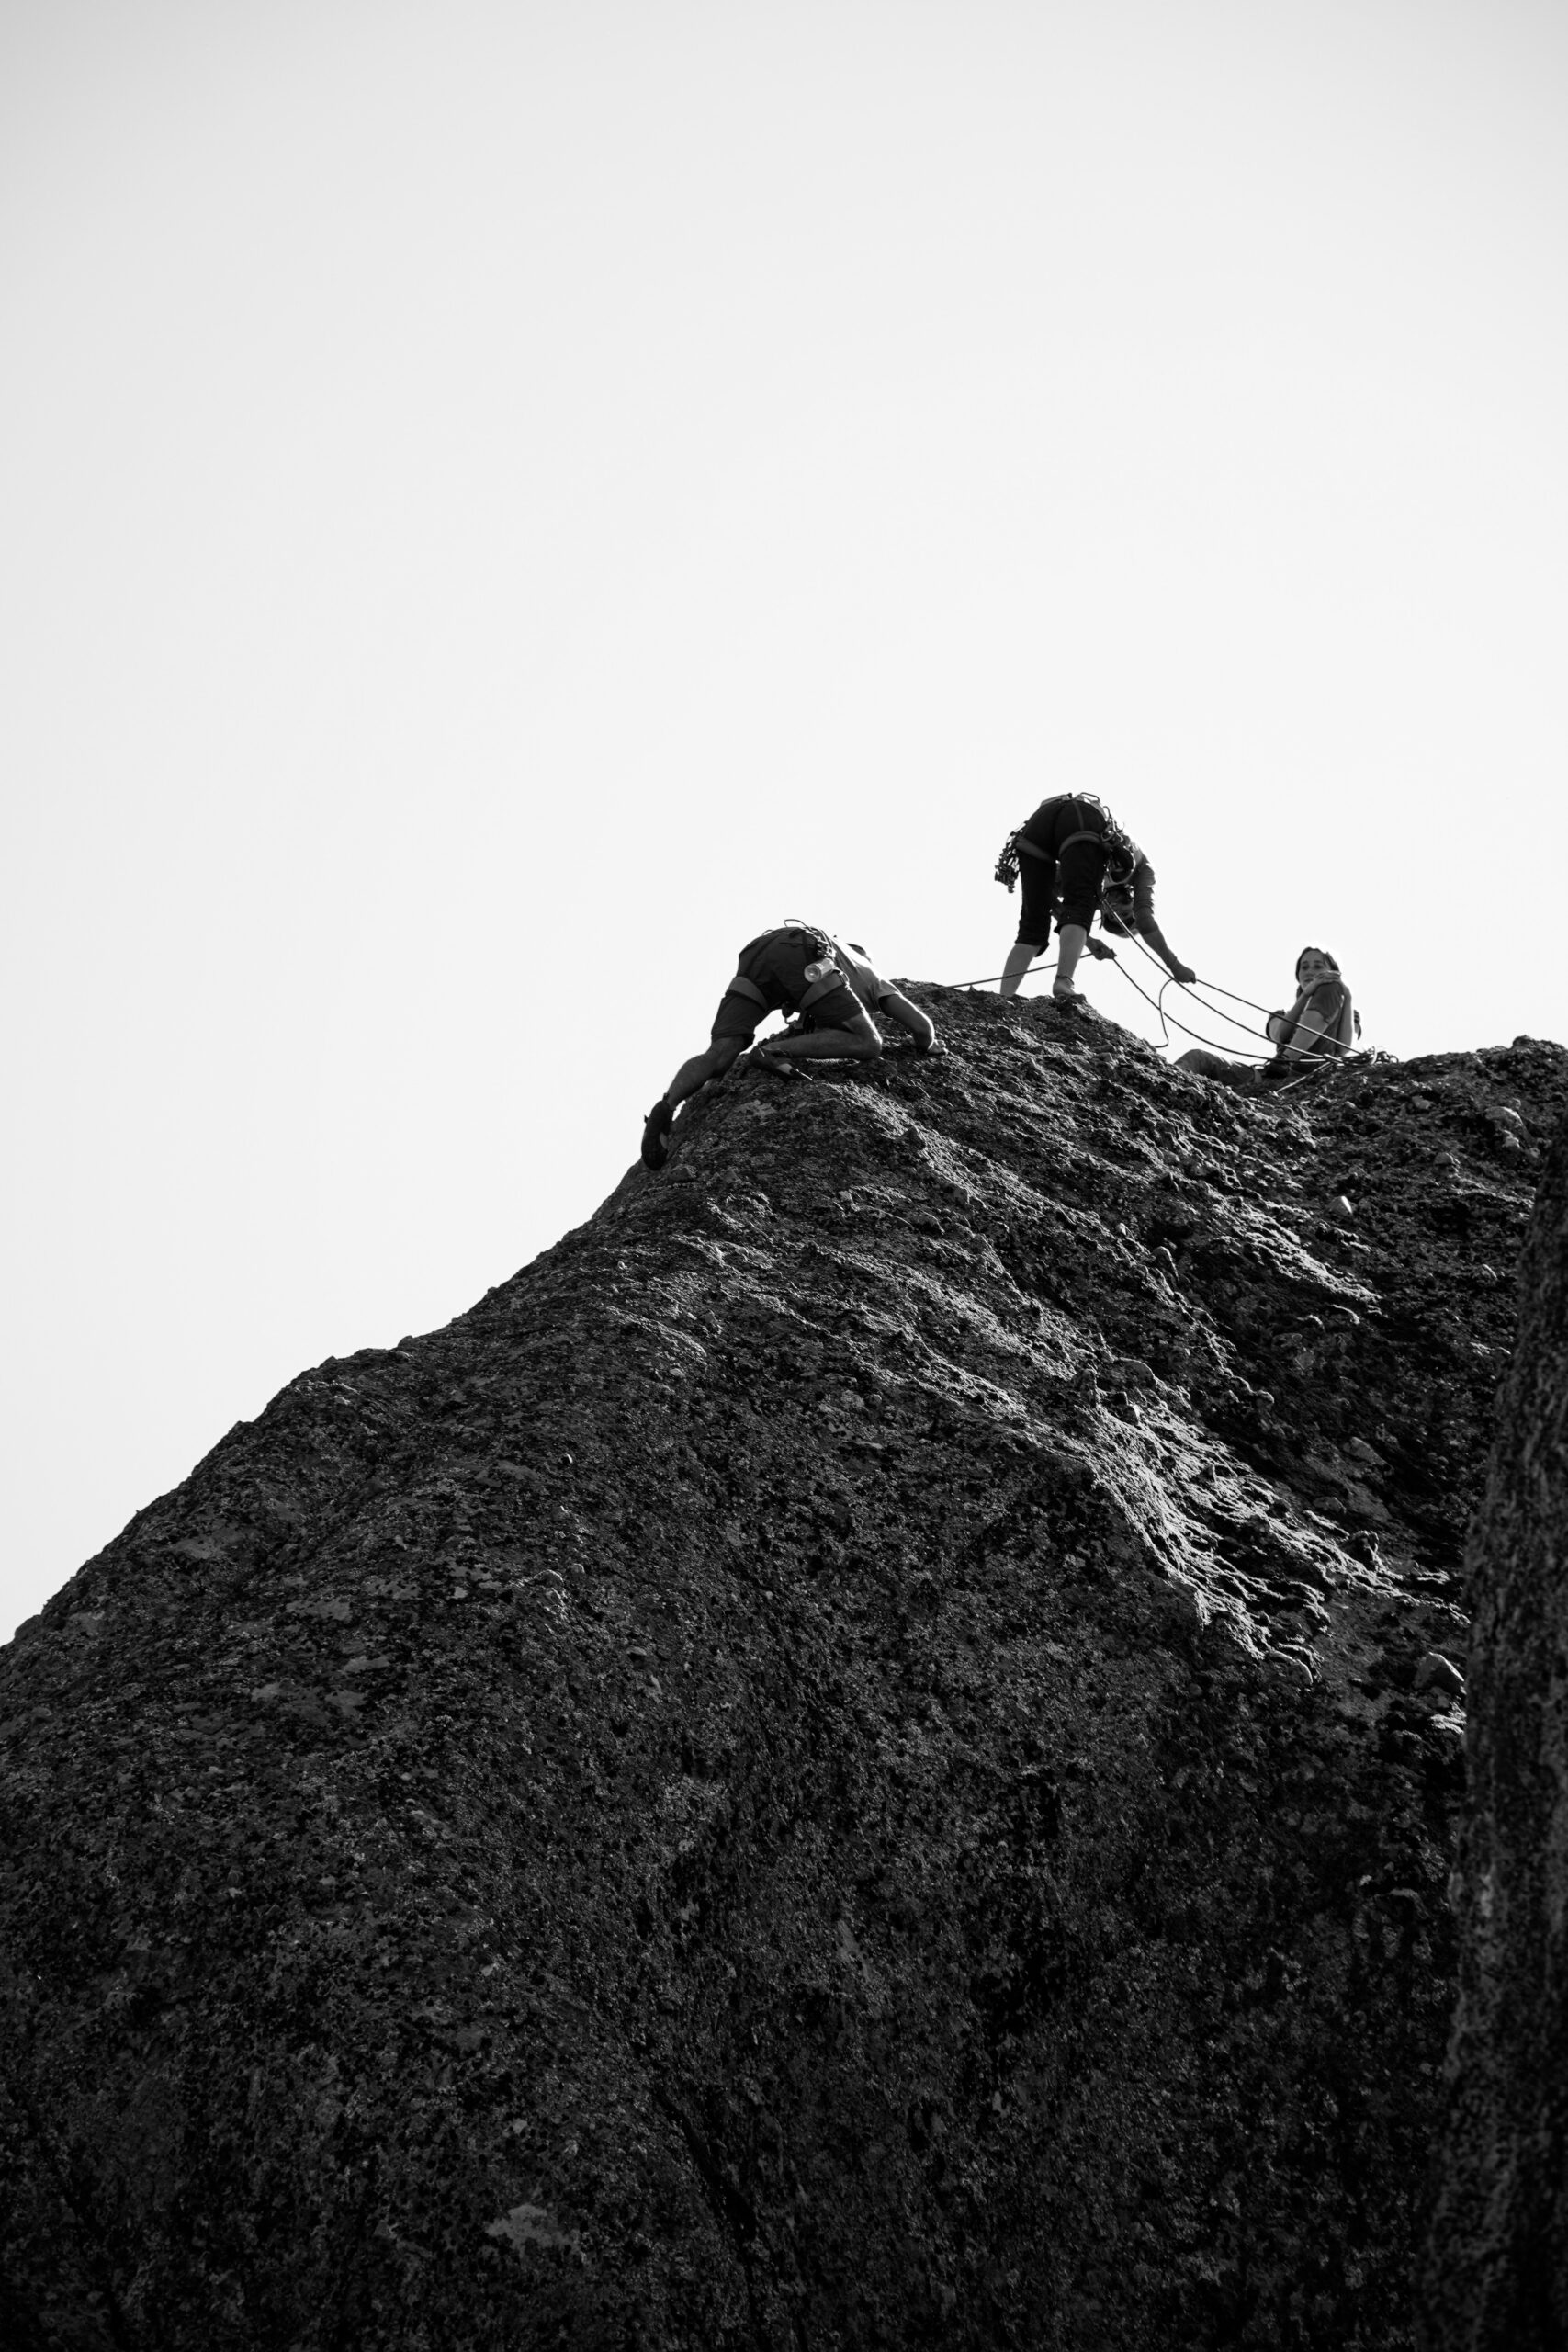 some climbers halfway up a crag